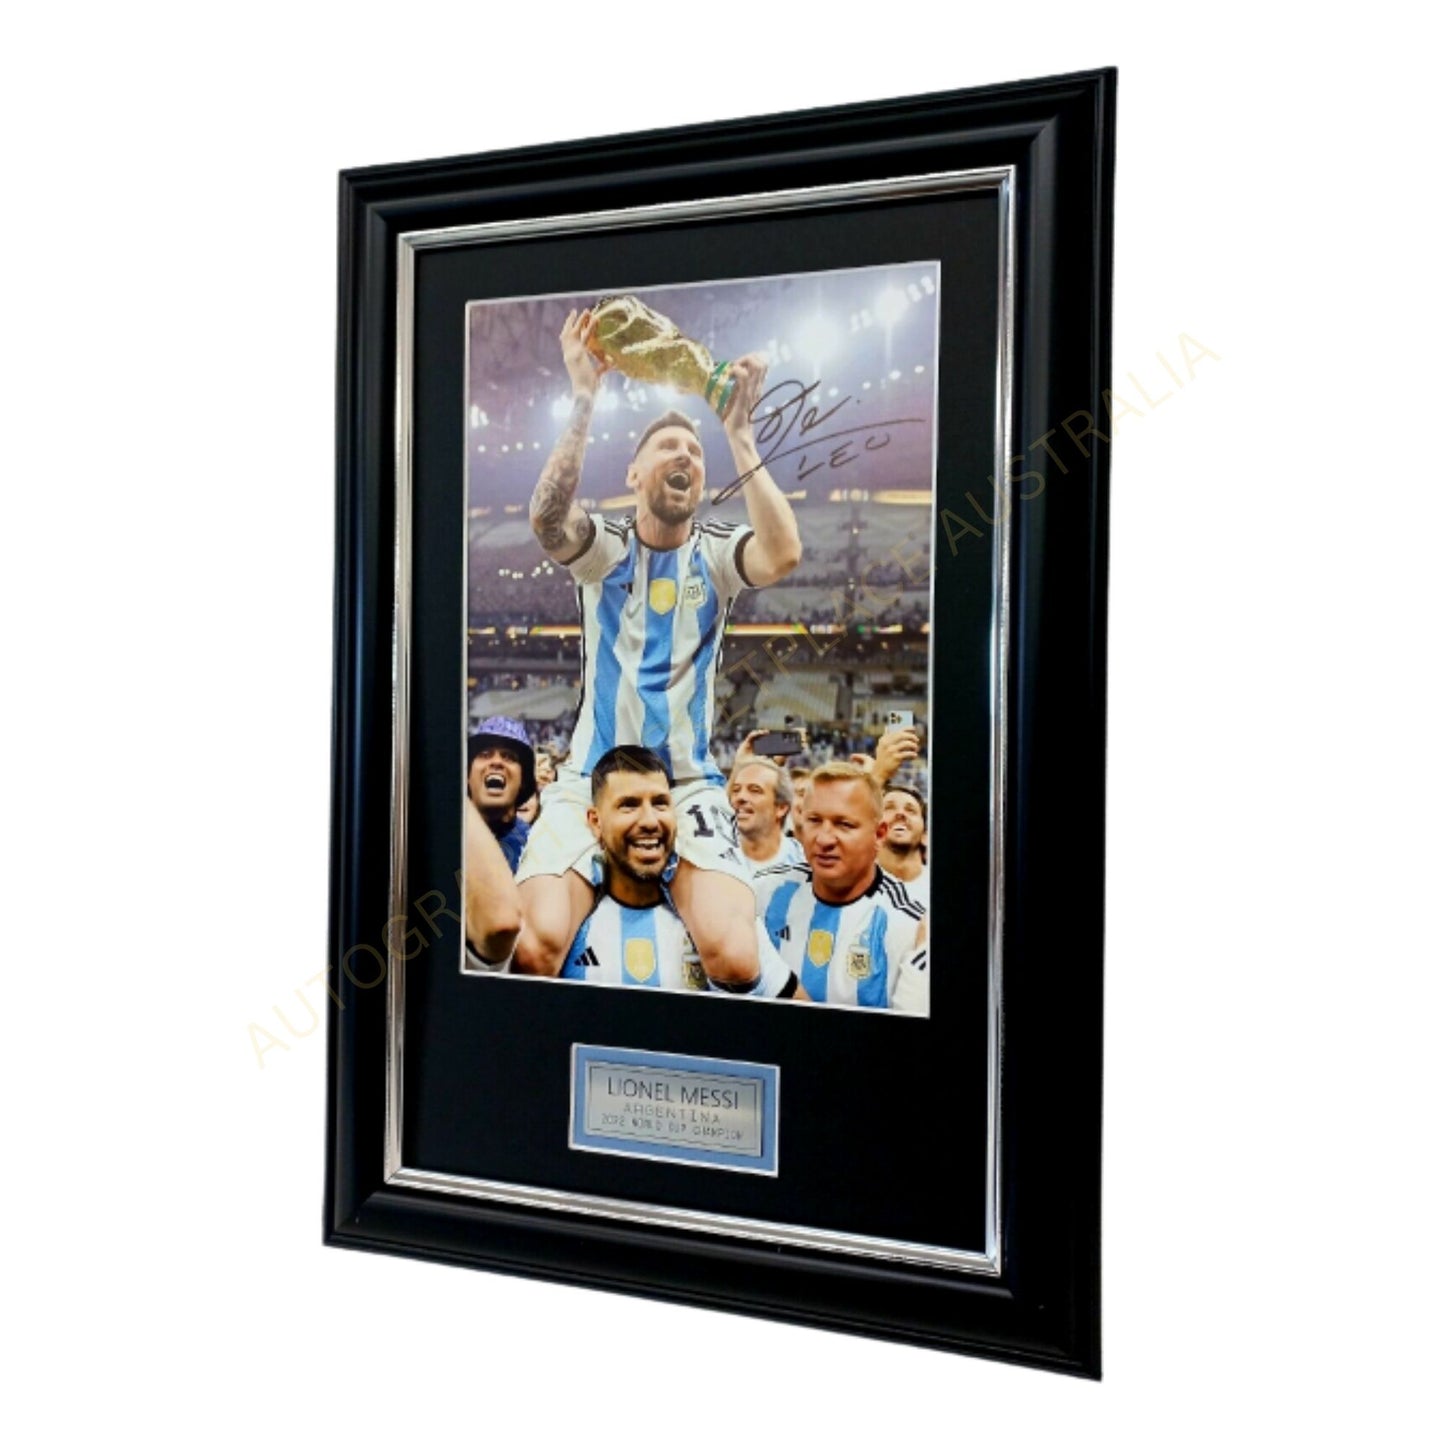 Leo Messi Argentina World & Copa America Champion Signed Framed Memorabilia